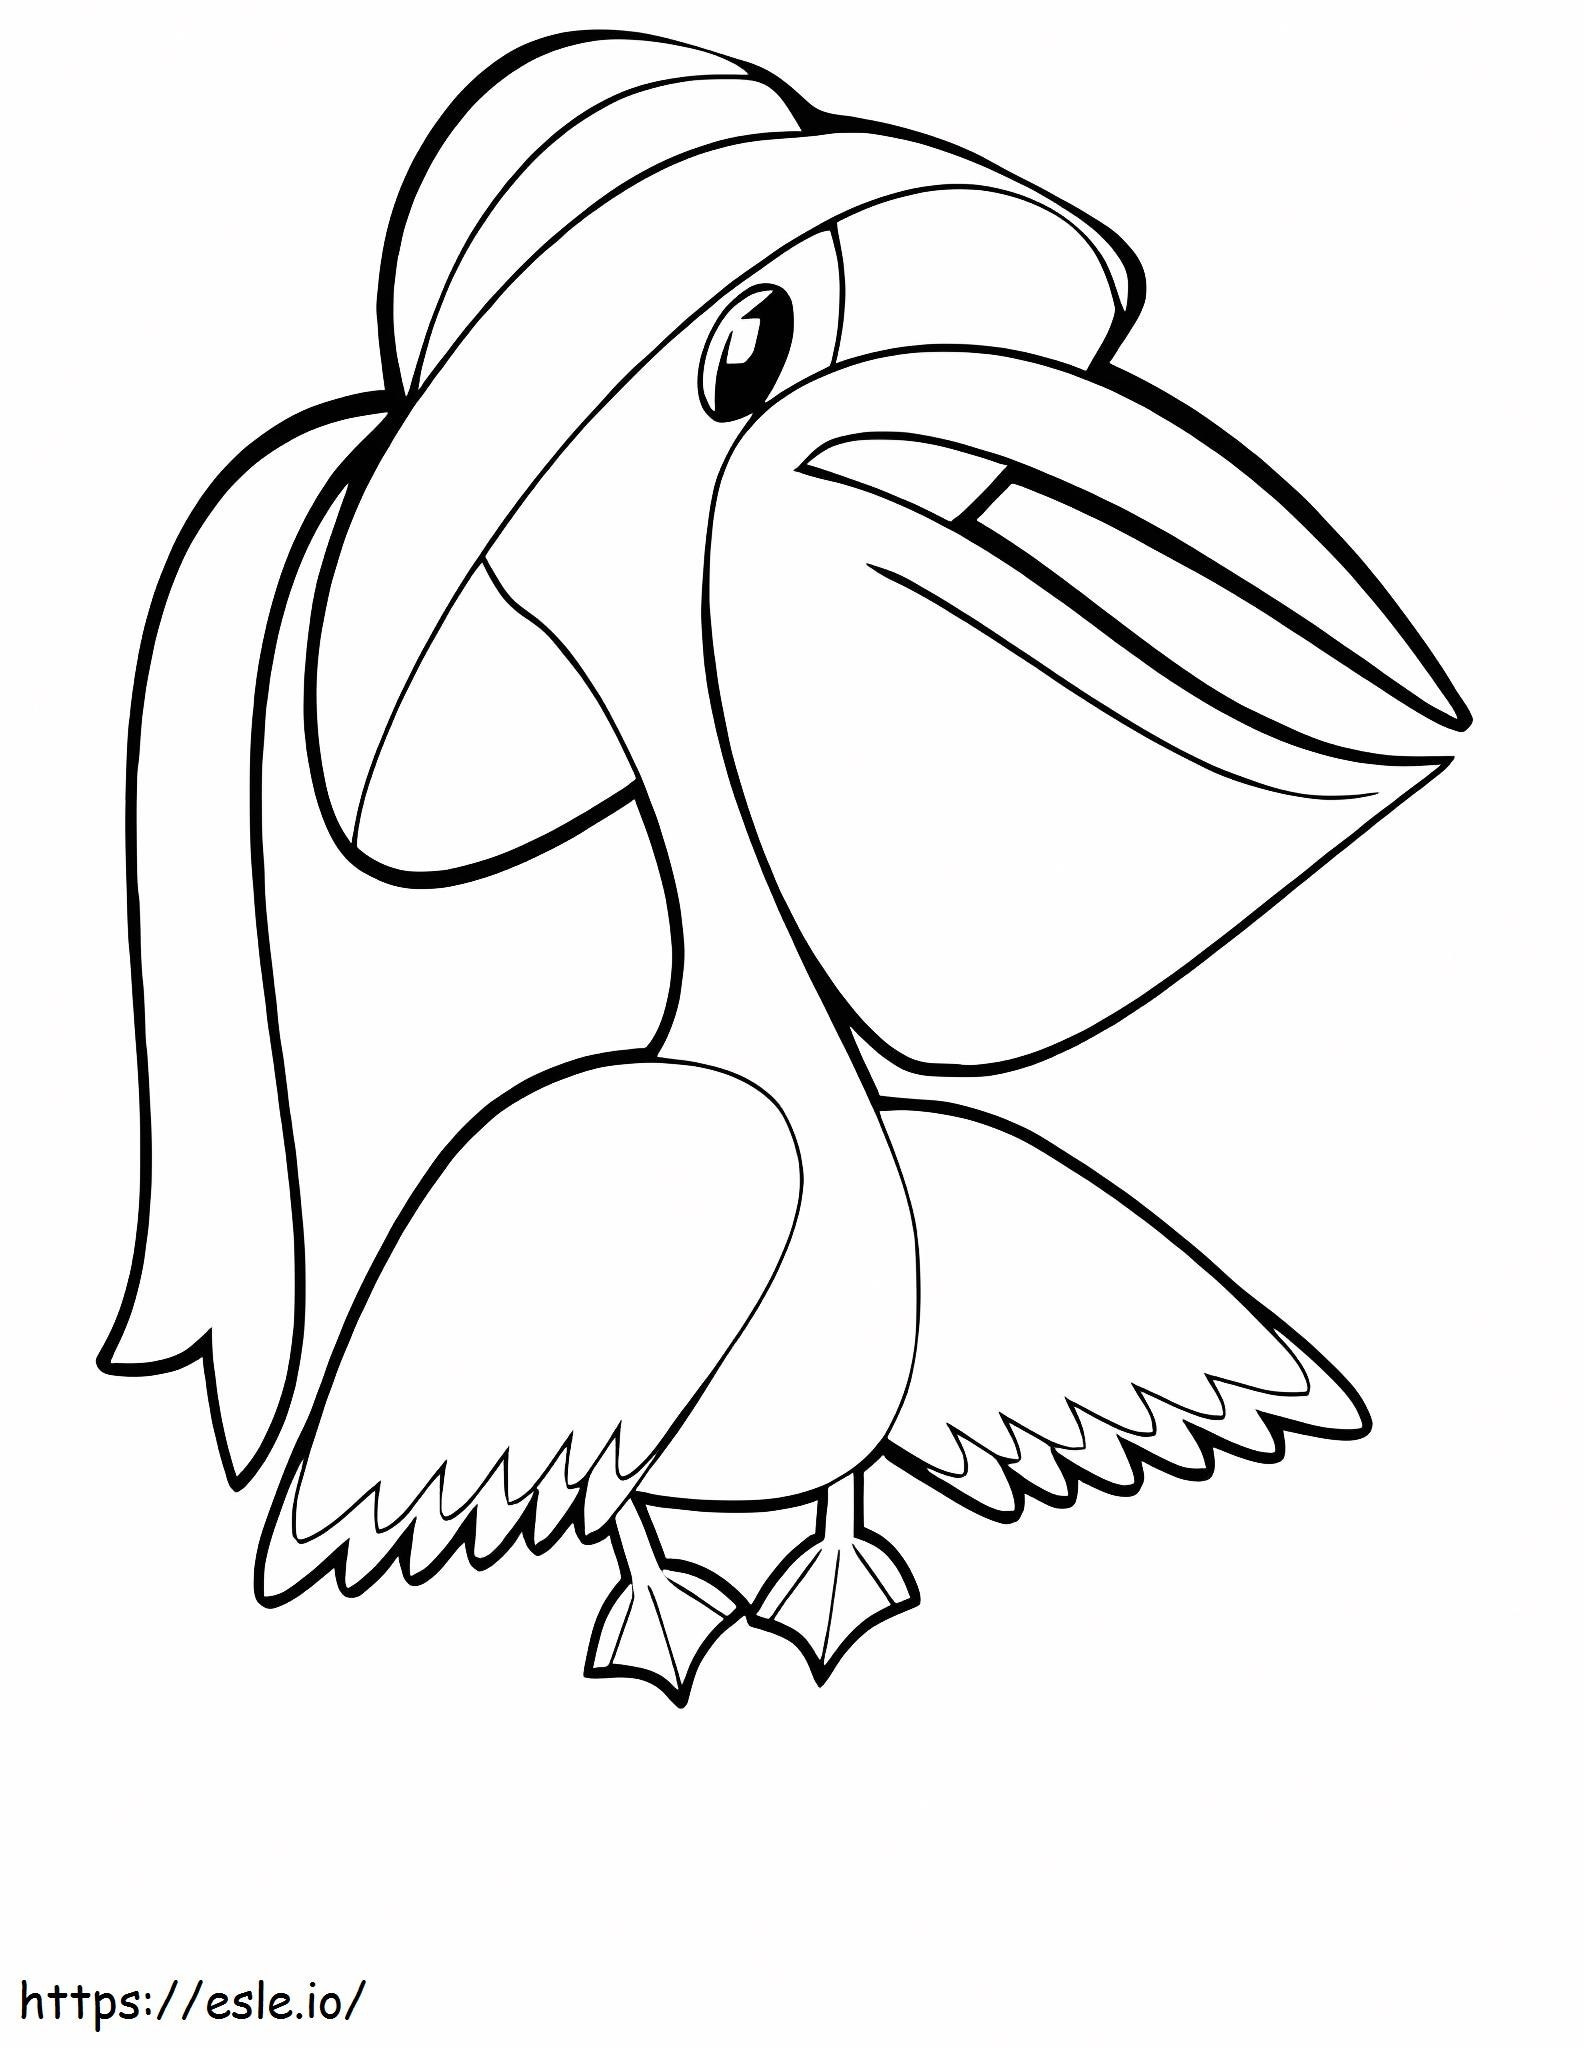 Snelste pelikaan kleurplaat kleurplaat